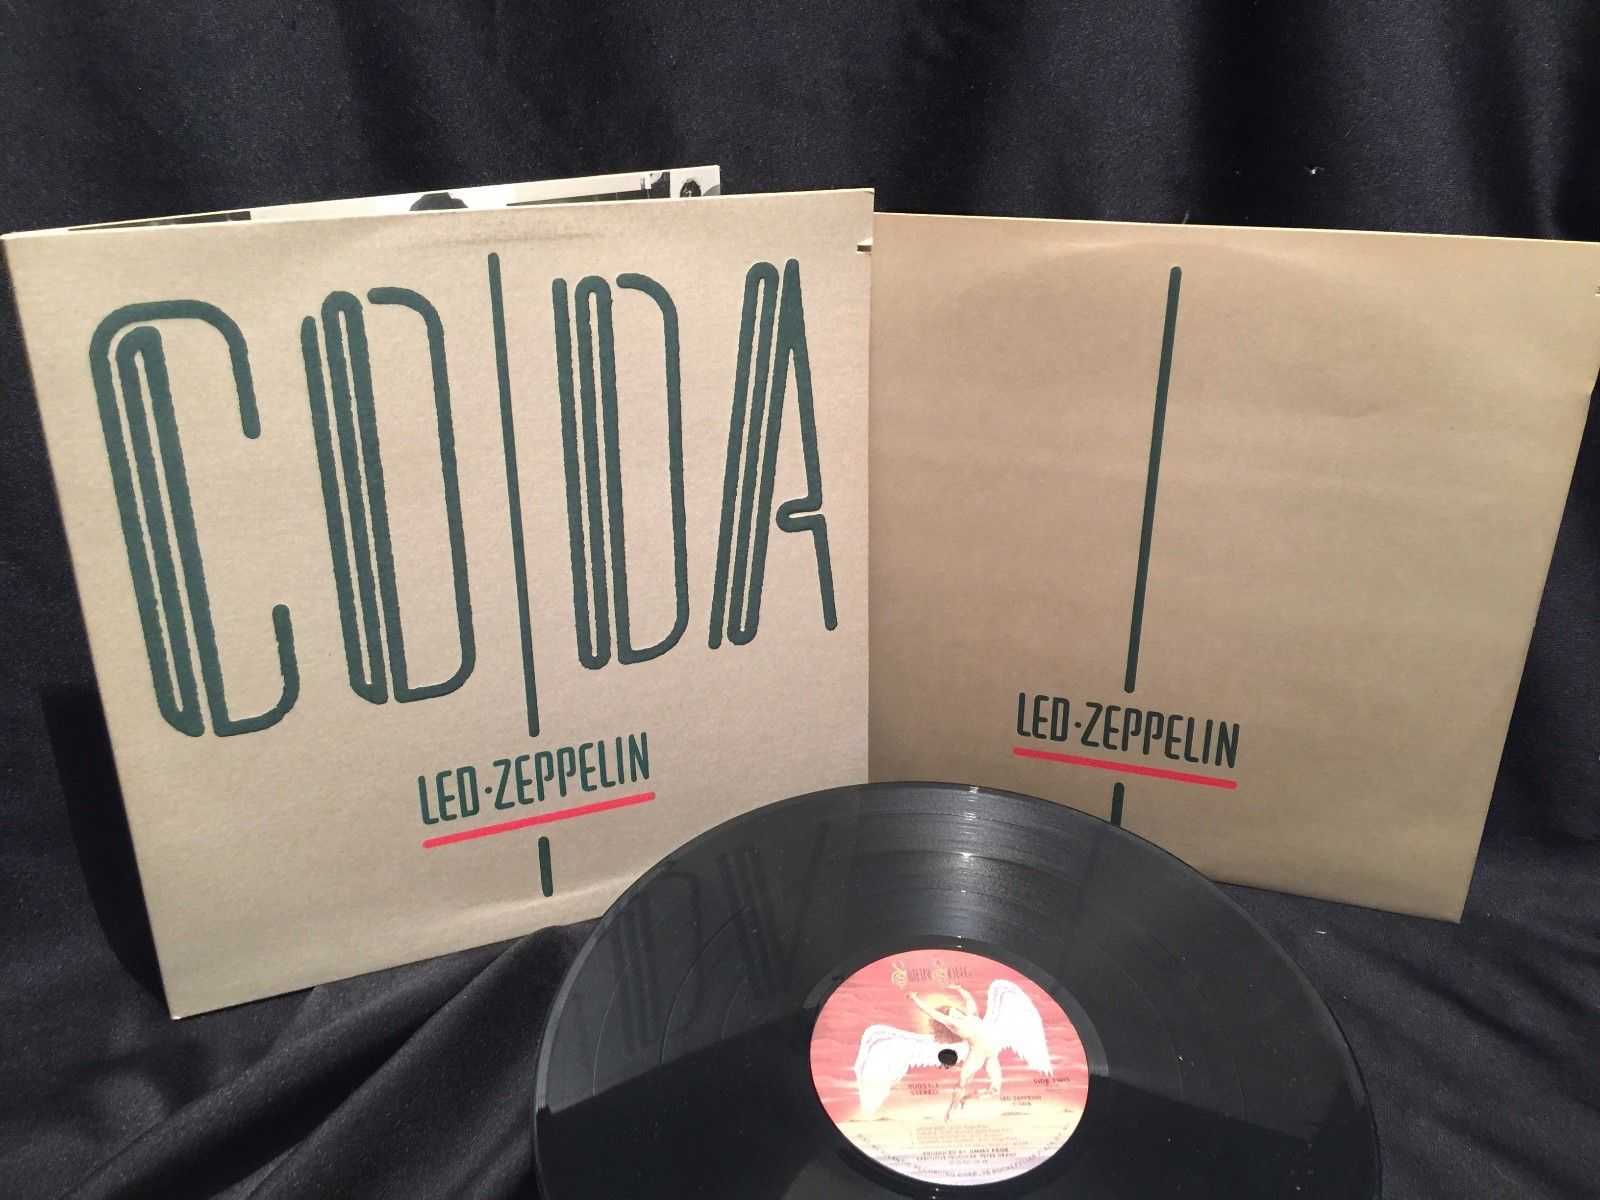 Coda (альбом) - coda (album) - wikipedia